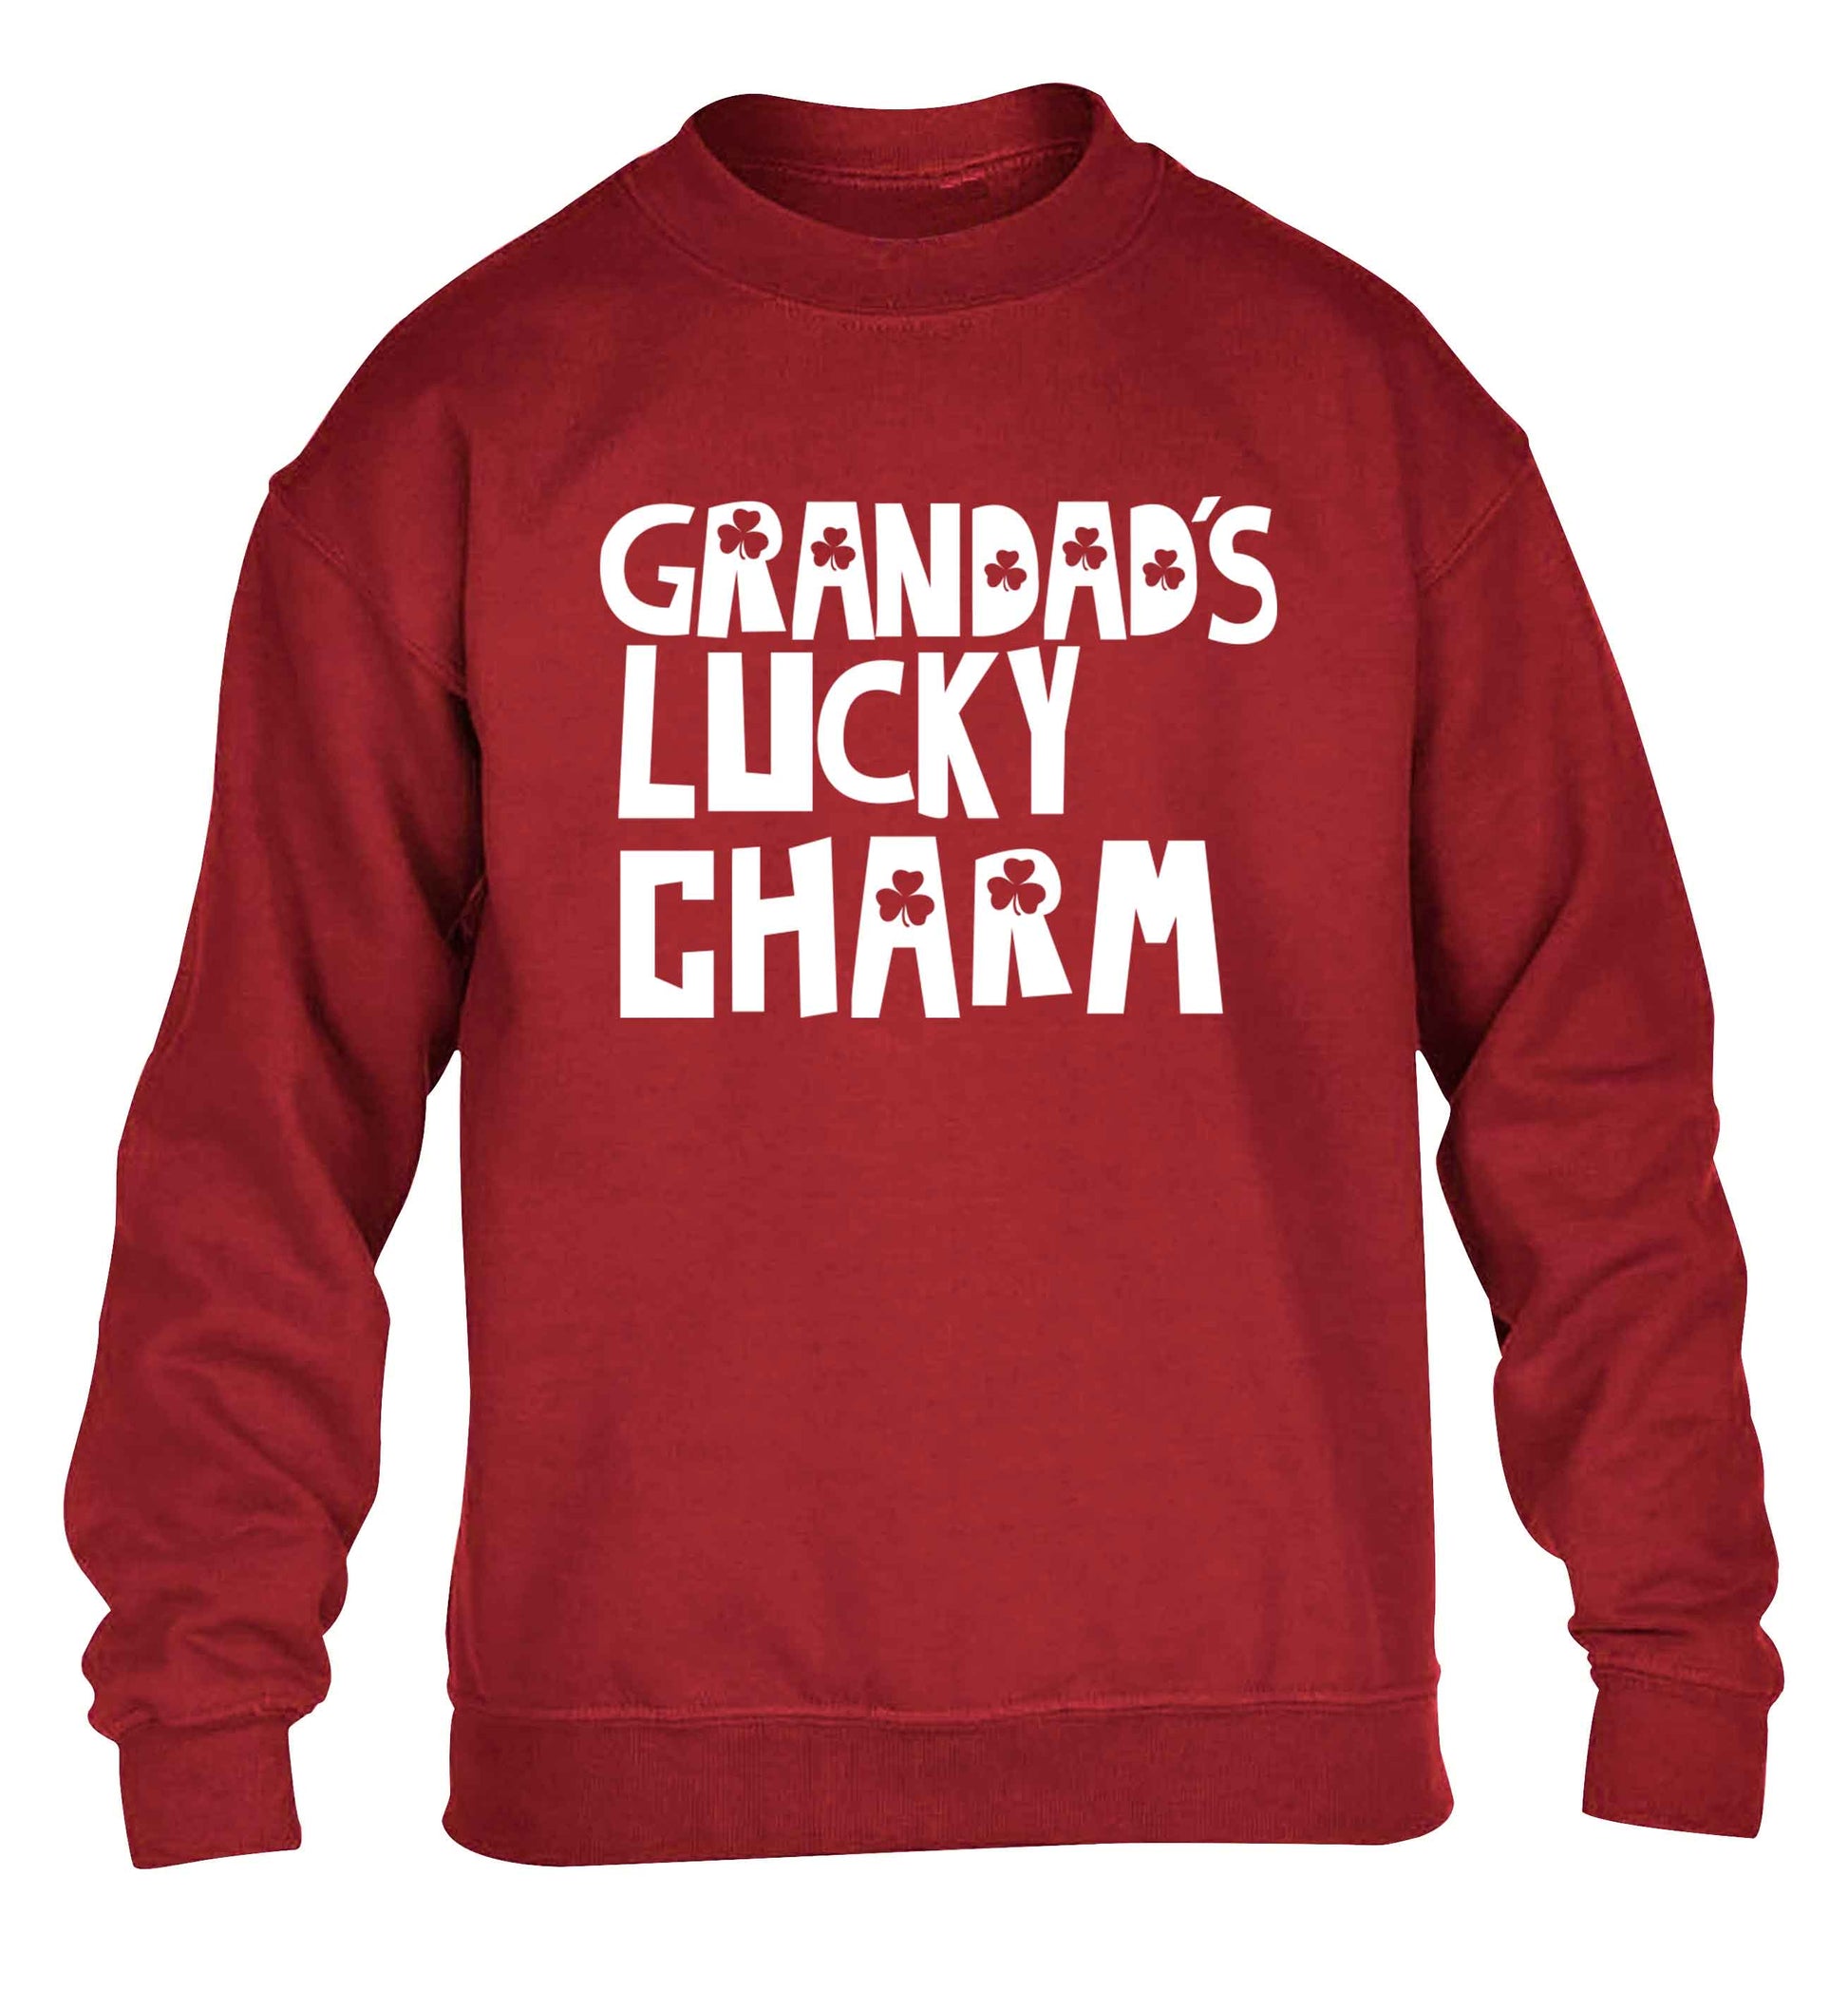 Grandad's lucky charm  children's grey sweater 12-13 Years